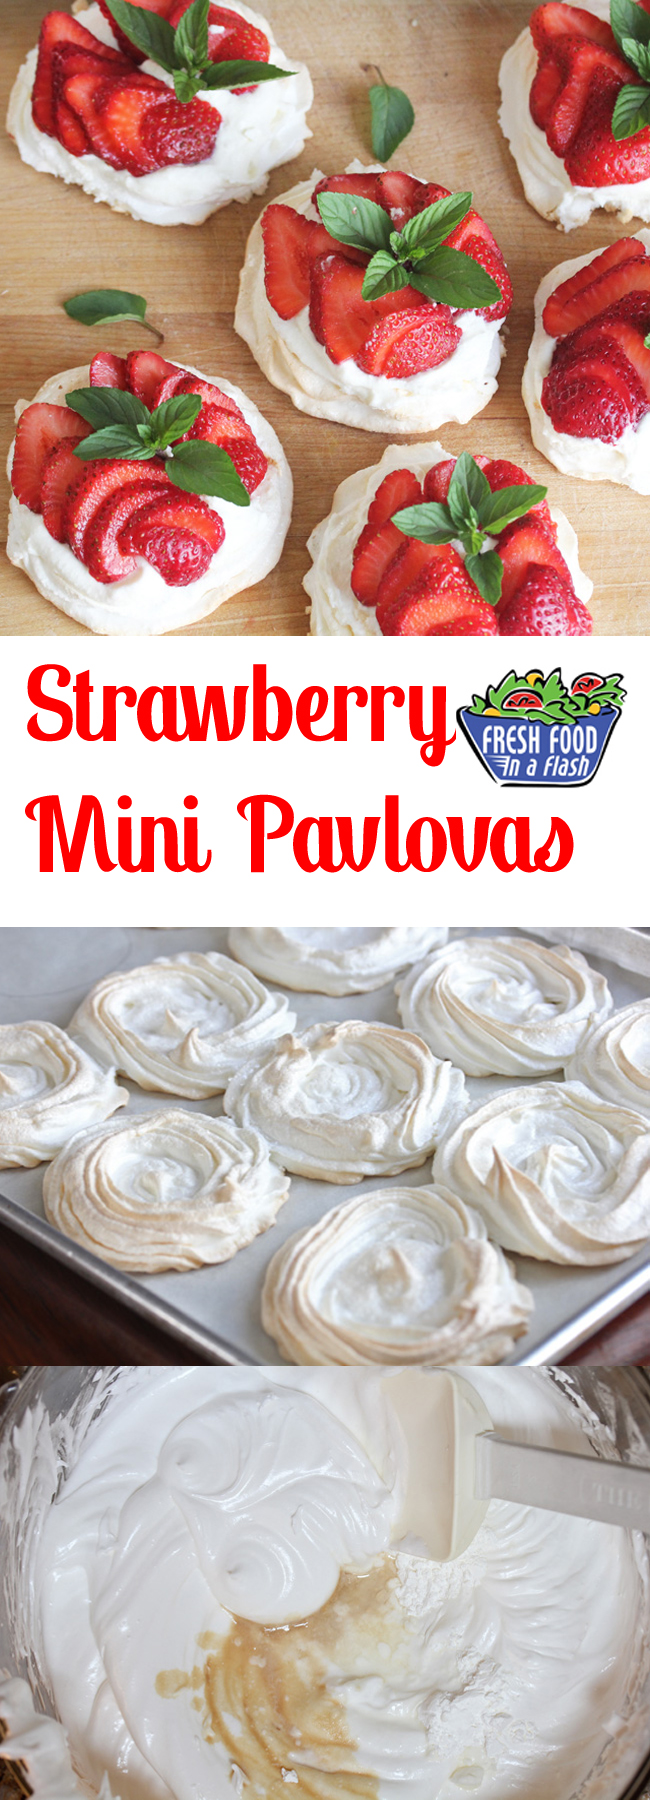 Strawberry Mini Pavlovas recipe at FreshFoodinaFlash.com